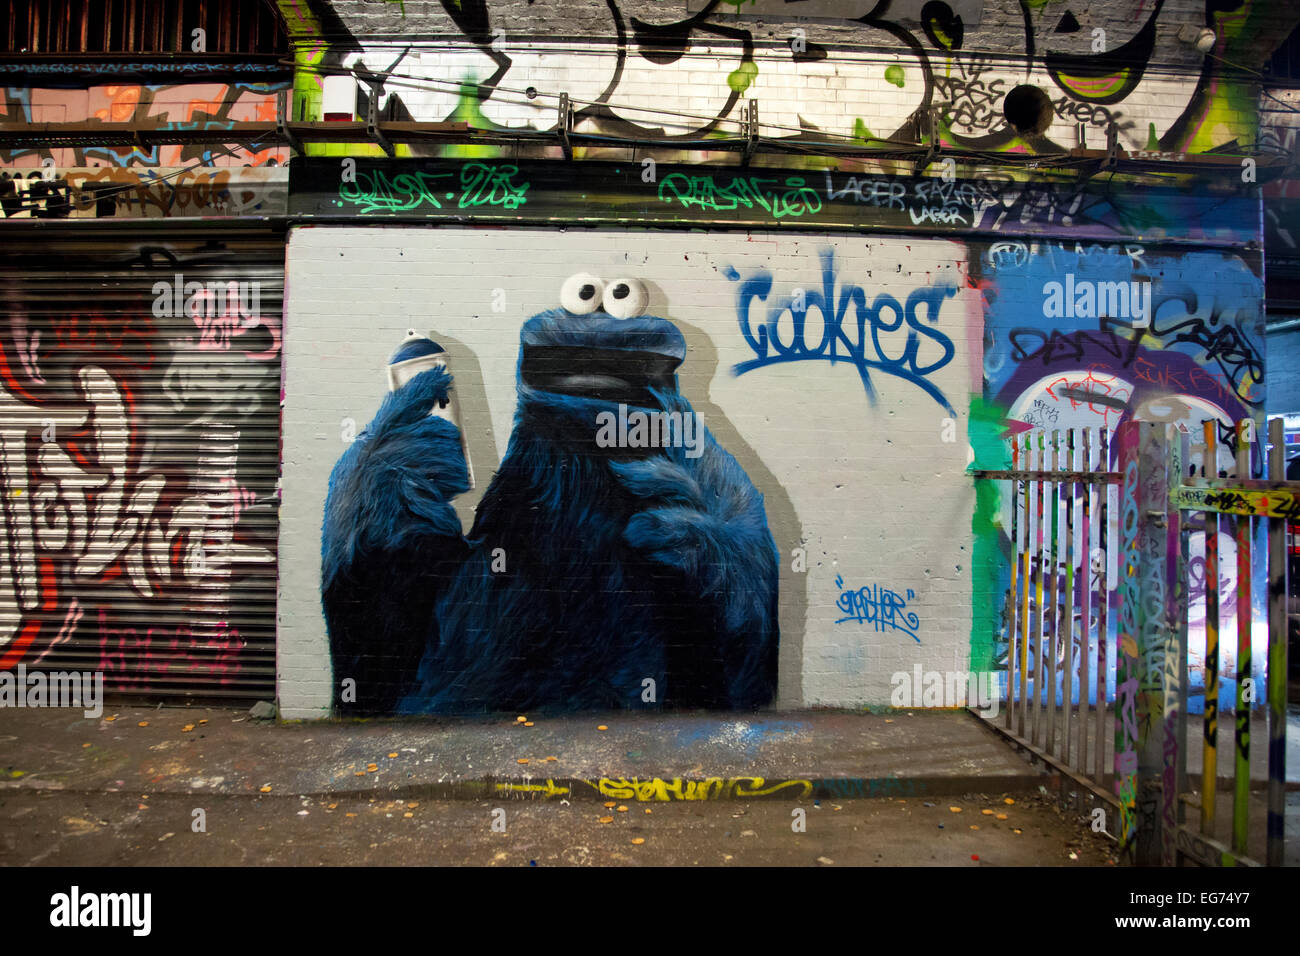 Cookie Monster Graffiti Leake Street, also known as Graffiti Tunnel underneath Waterloo Train Station, Lambeth, London, UK. Stock Photo